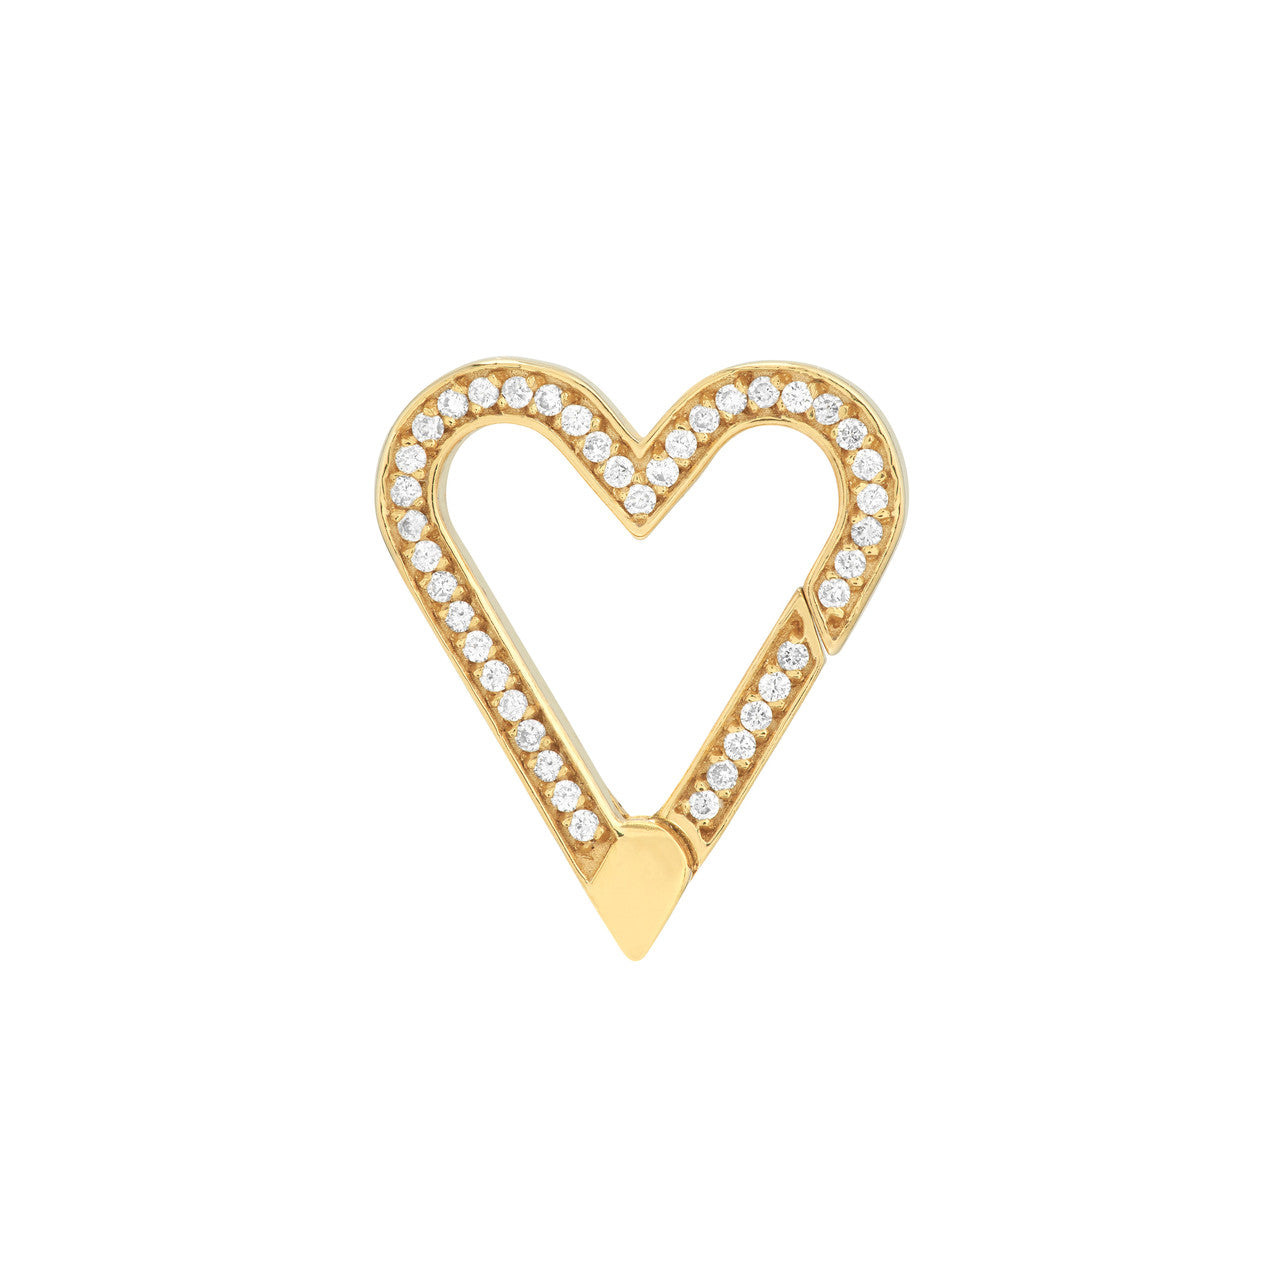 14k Yellow Gold Diamond Heart Push Clasp Lock Connector Pendant Charm Hanger Bail Enhancer